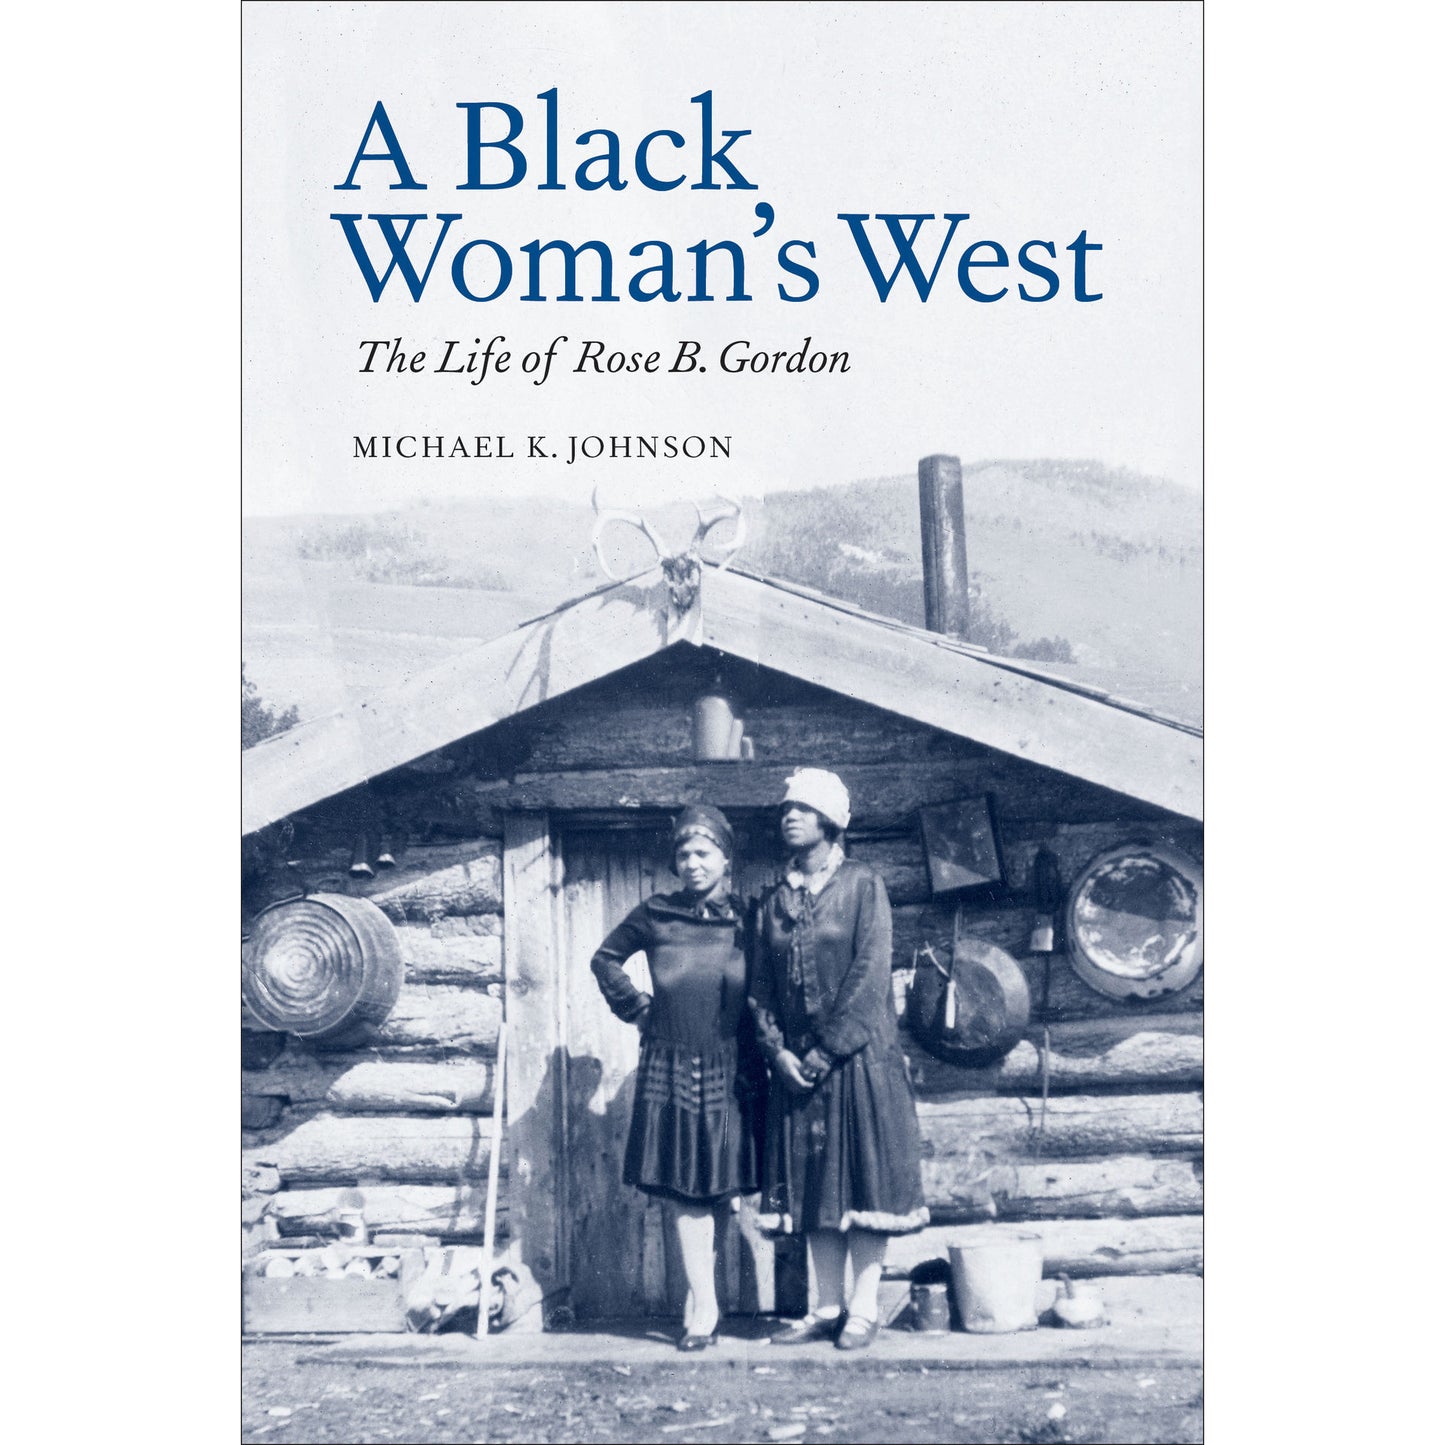 A Black Woman's West: The Life of Rose B. Gordon by Michael K. Johnson